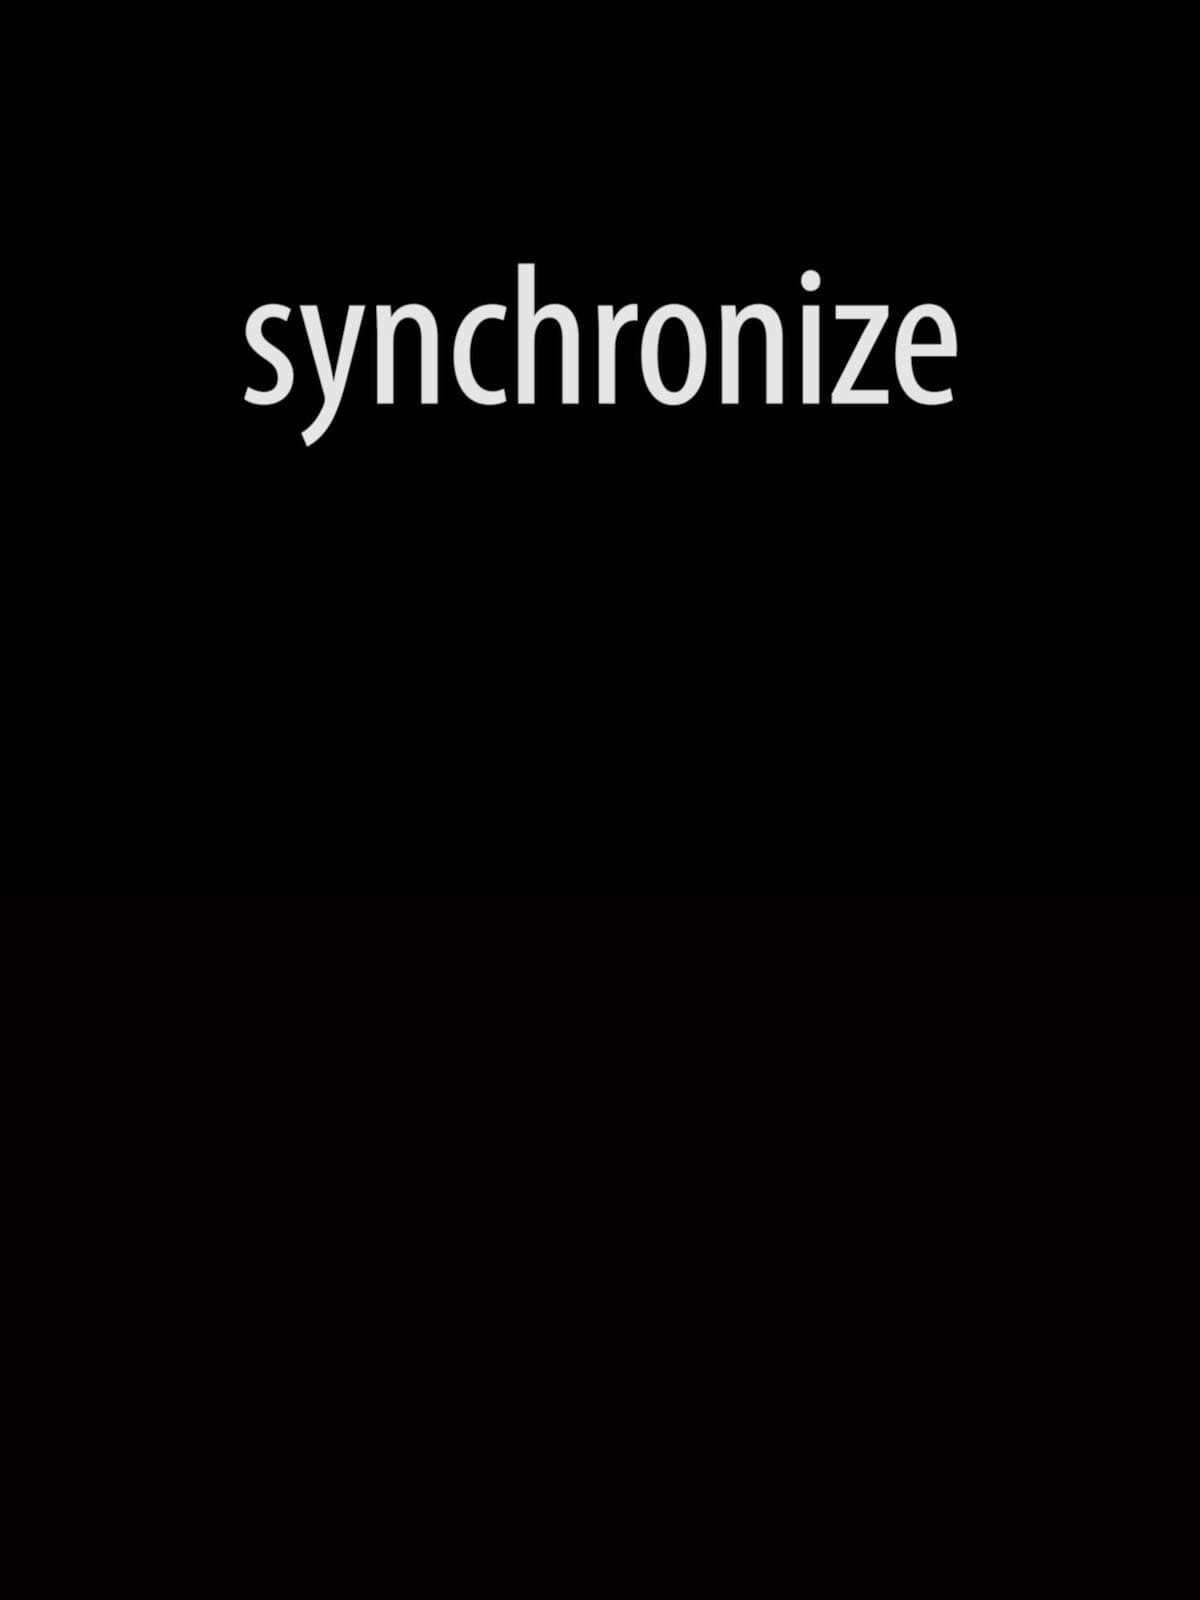 Synchronize